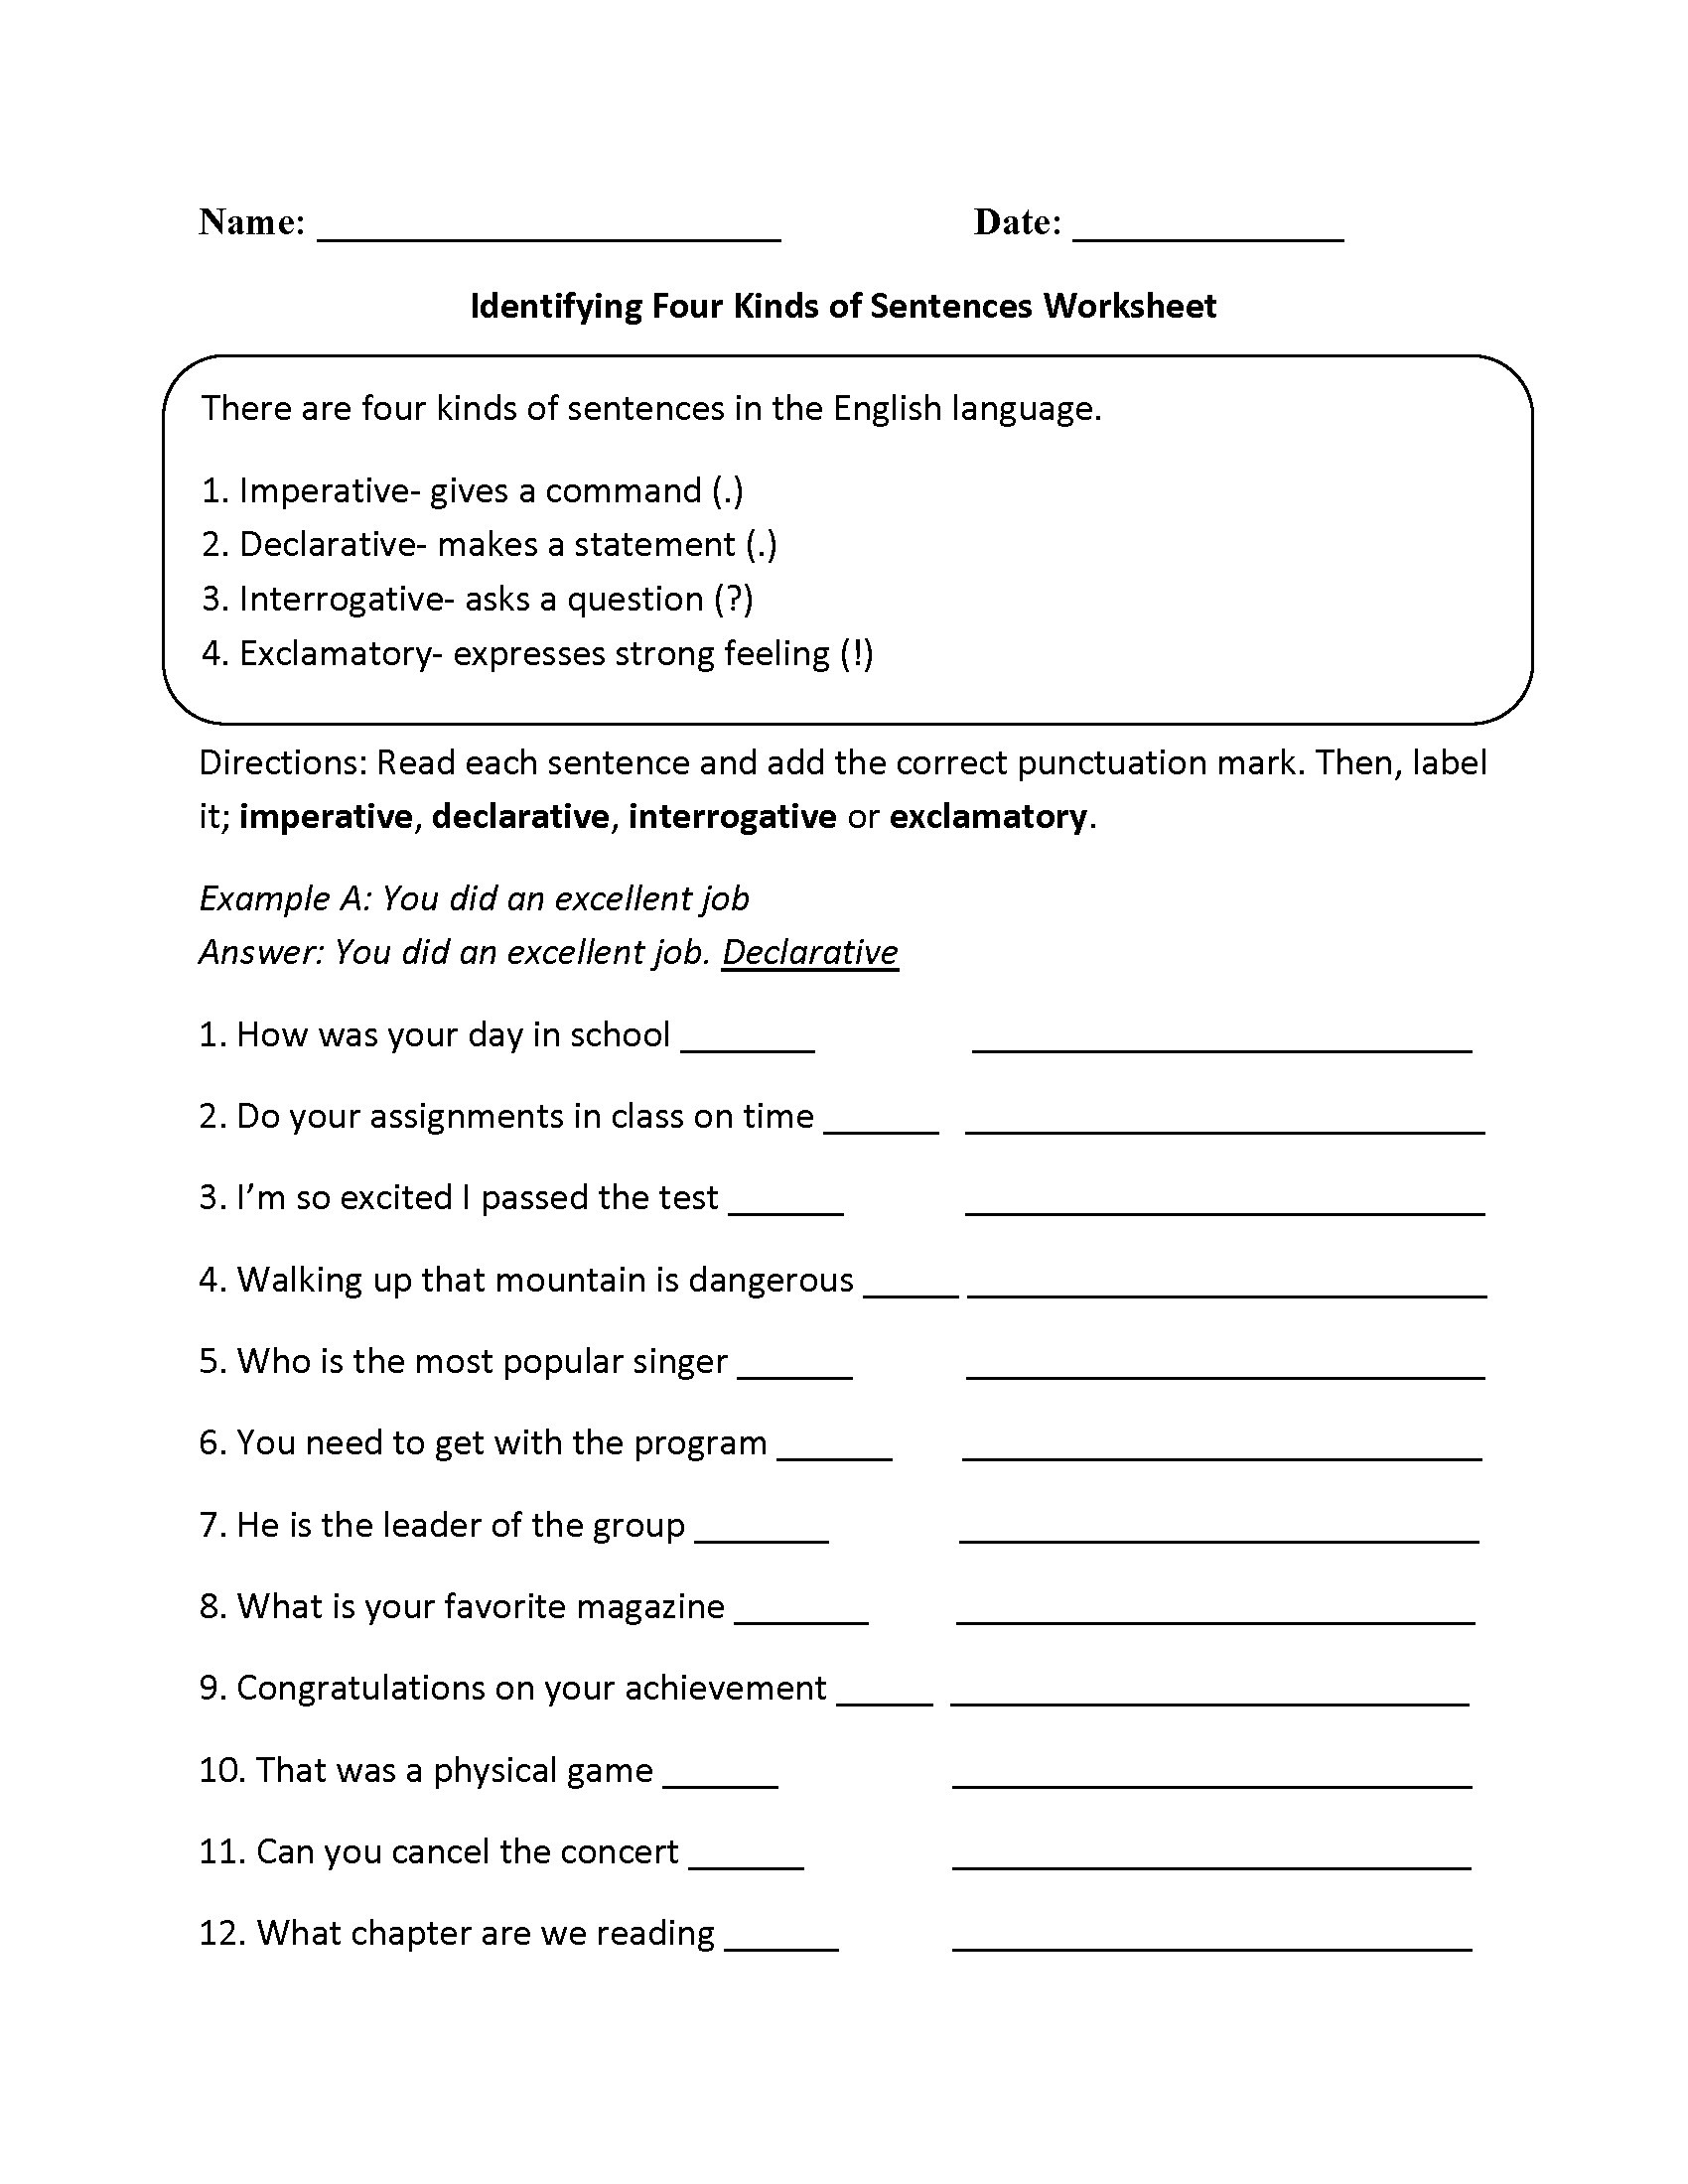 worksheet-children-mathematics-easy-reading-comprehension-db-excel